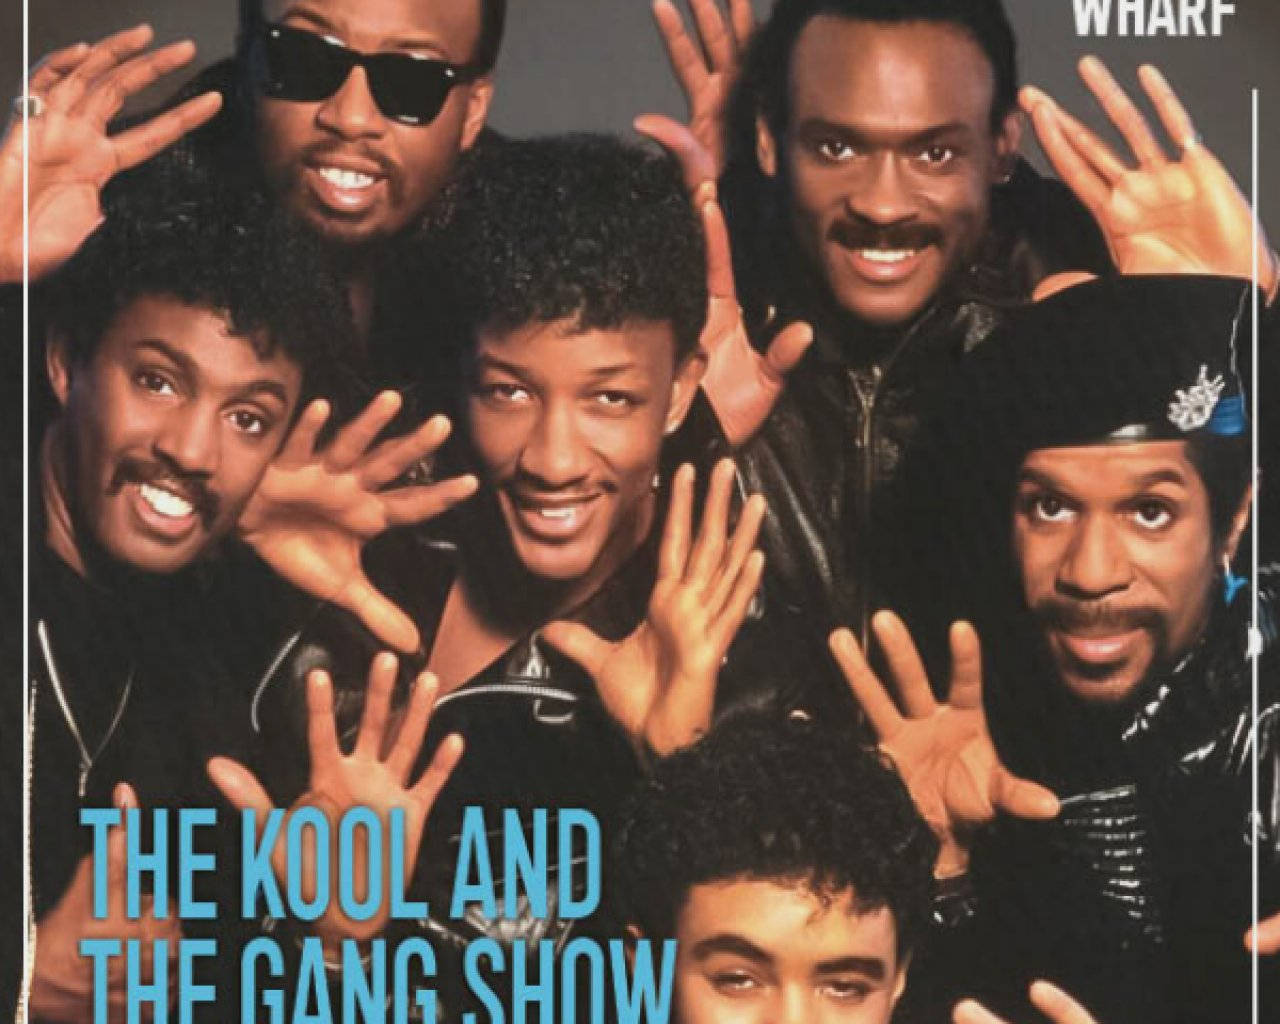 Kooland The Gang Omgjort Albumomslag Wallpaper